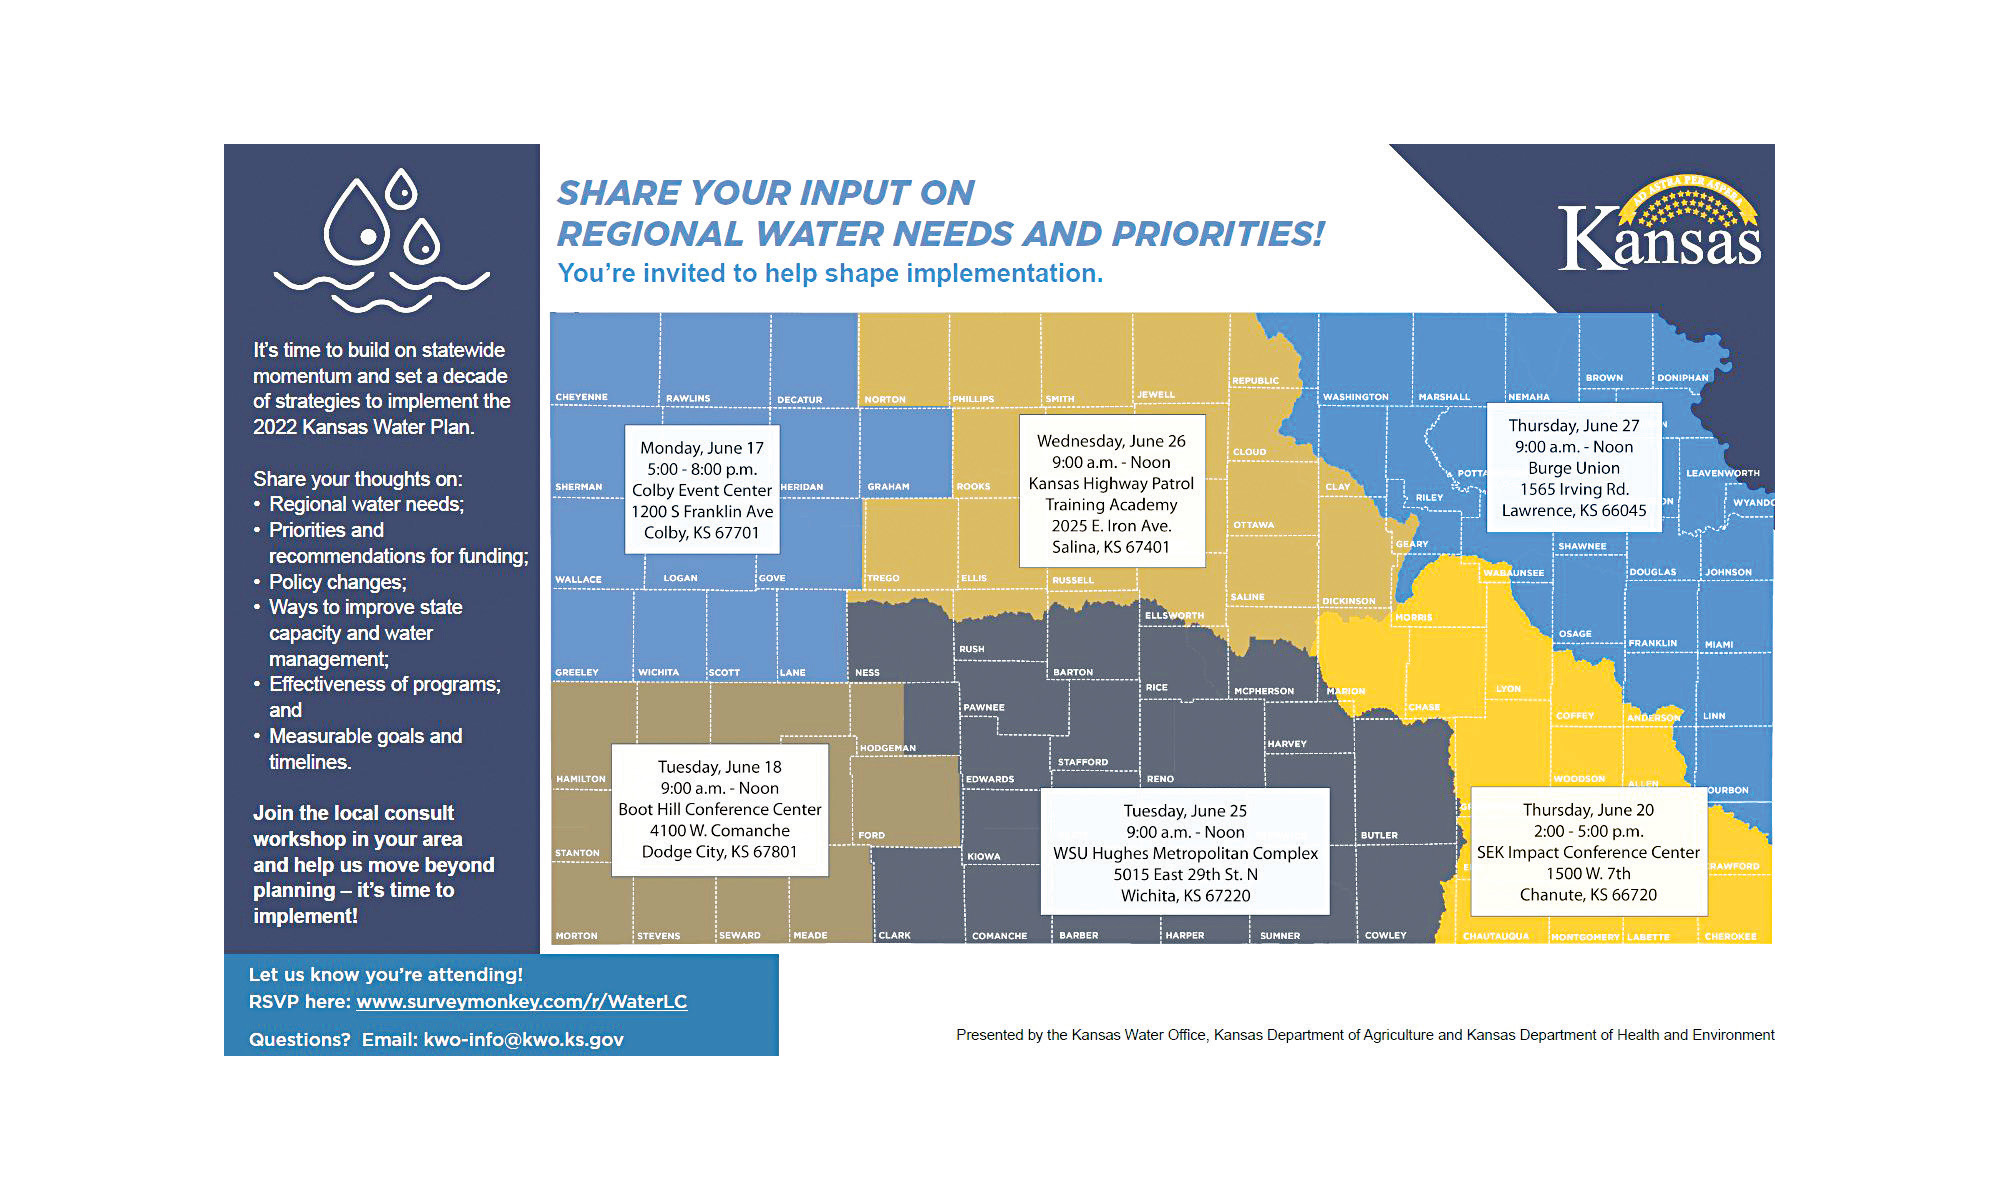 Kansas Water Office implementation meetings.